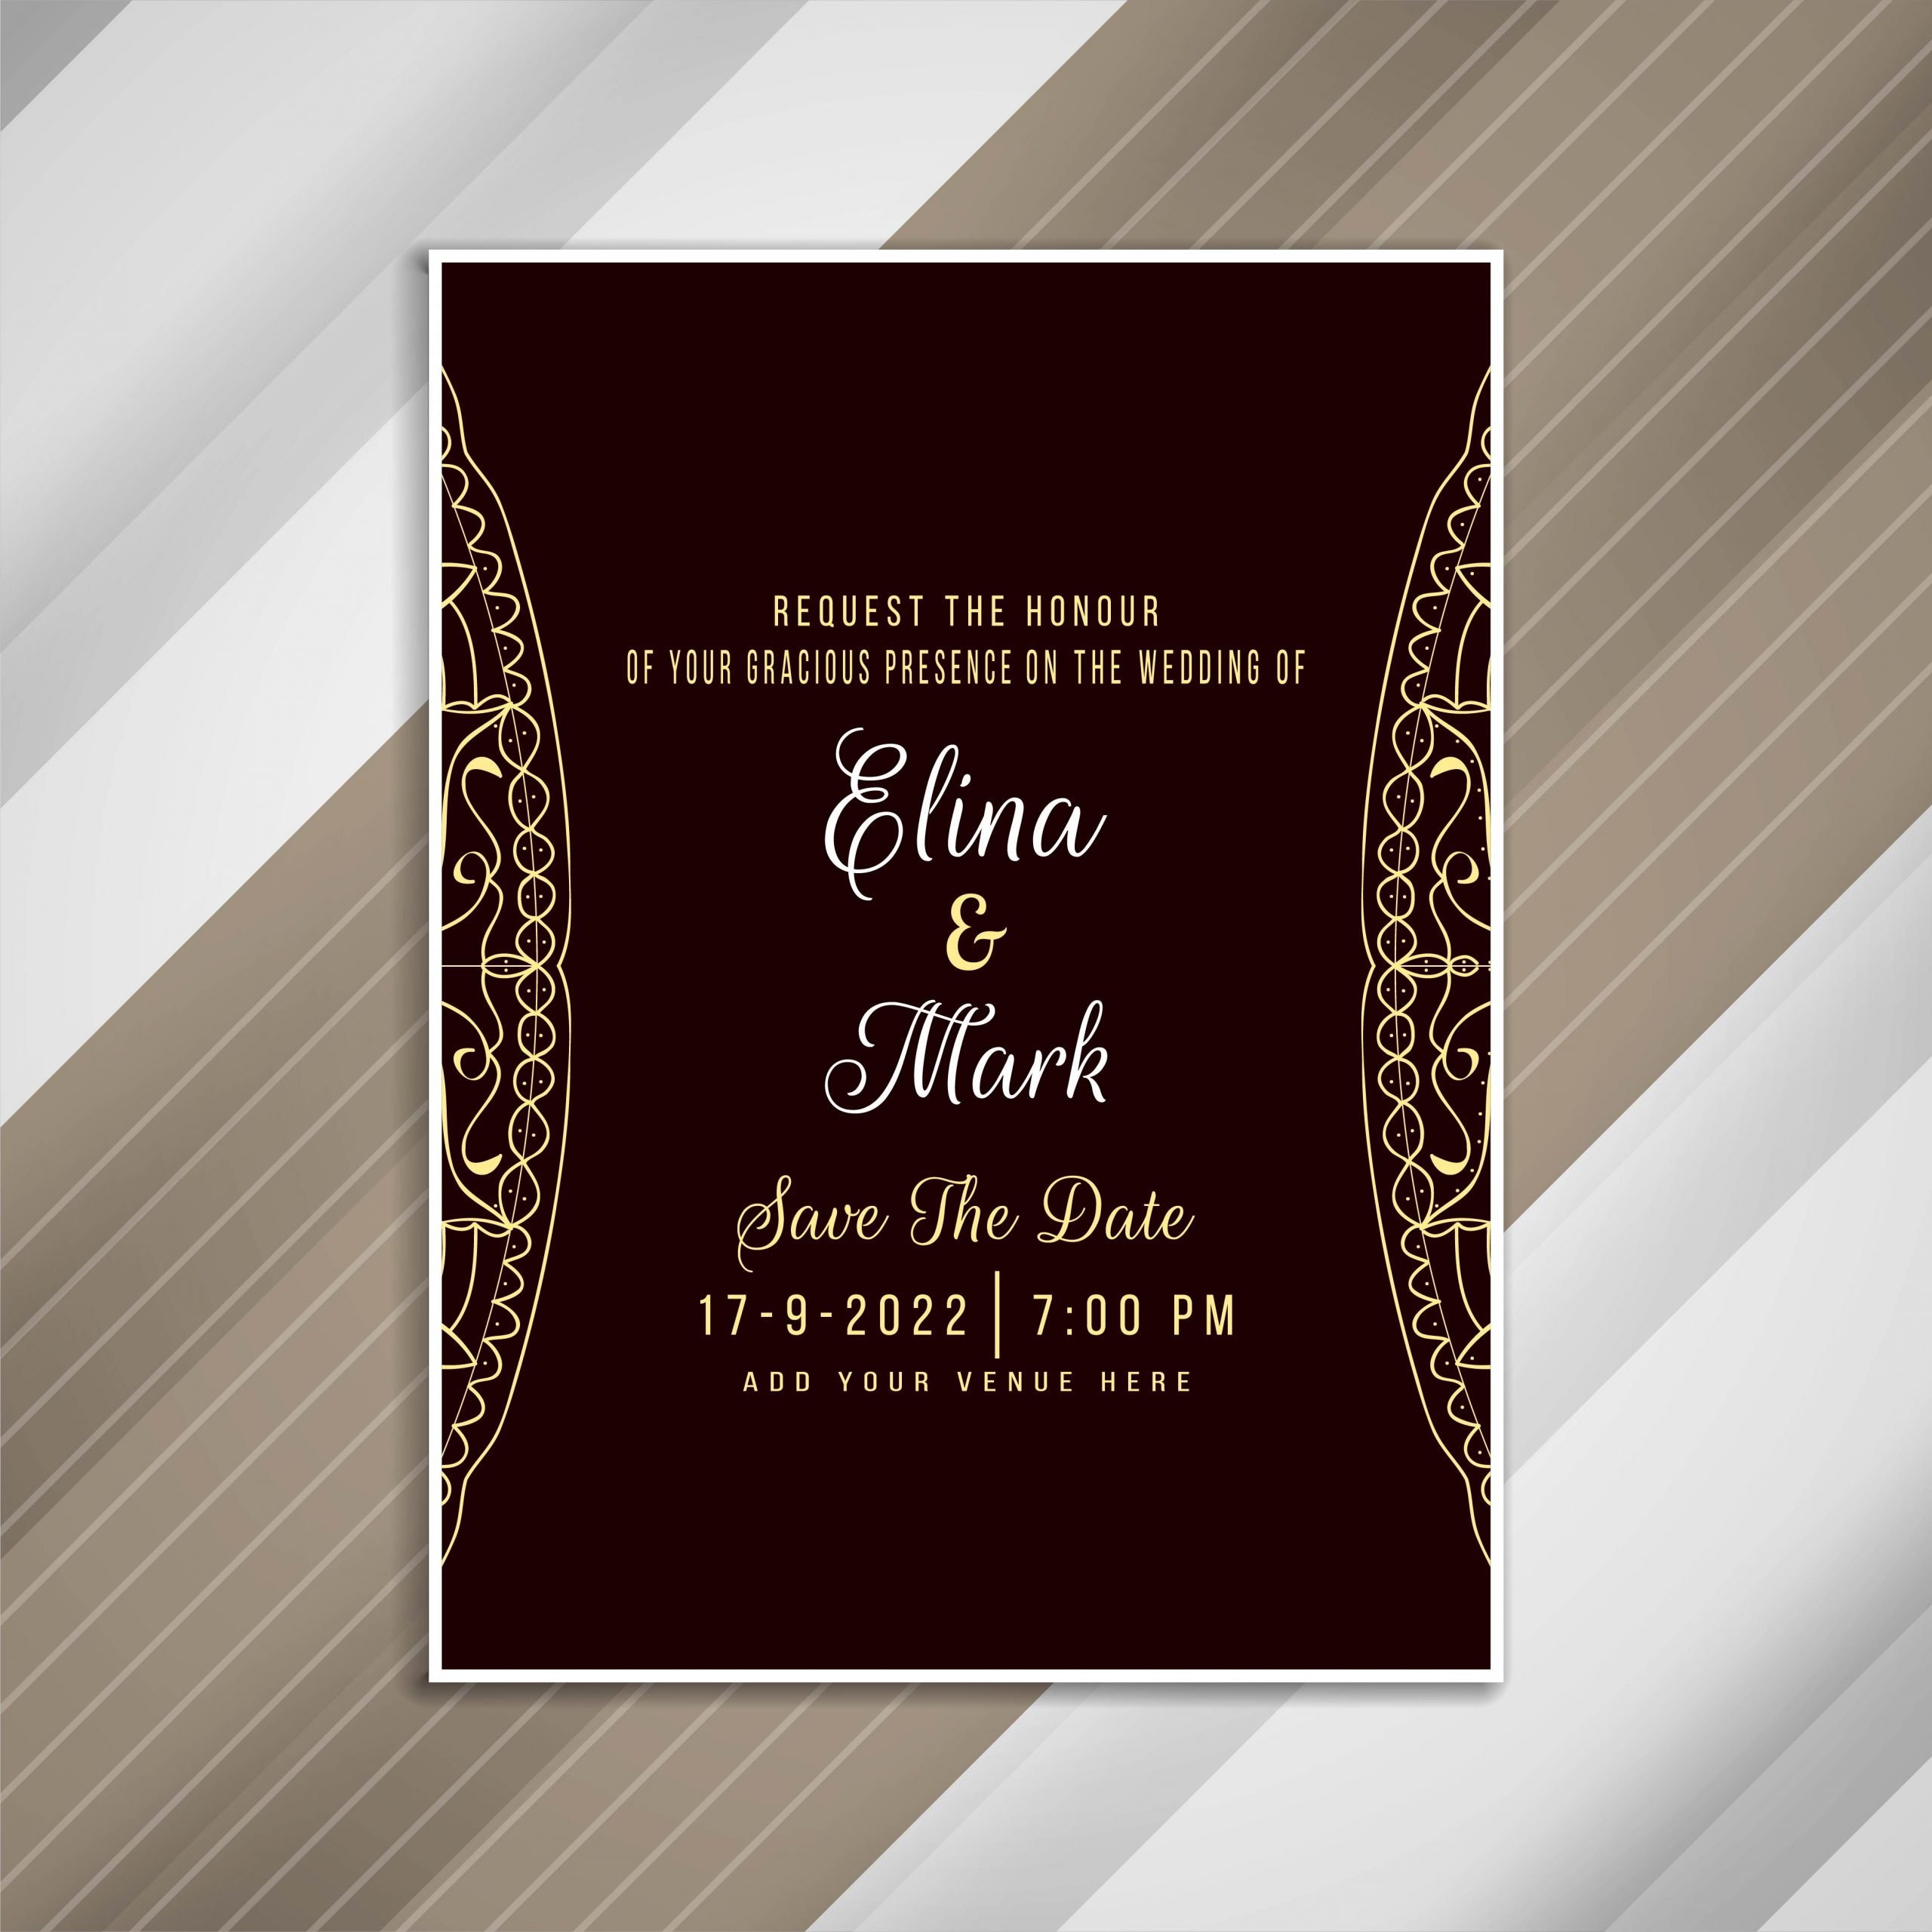 Abstract beautiful wedding invitation card design 254814 ...